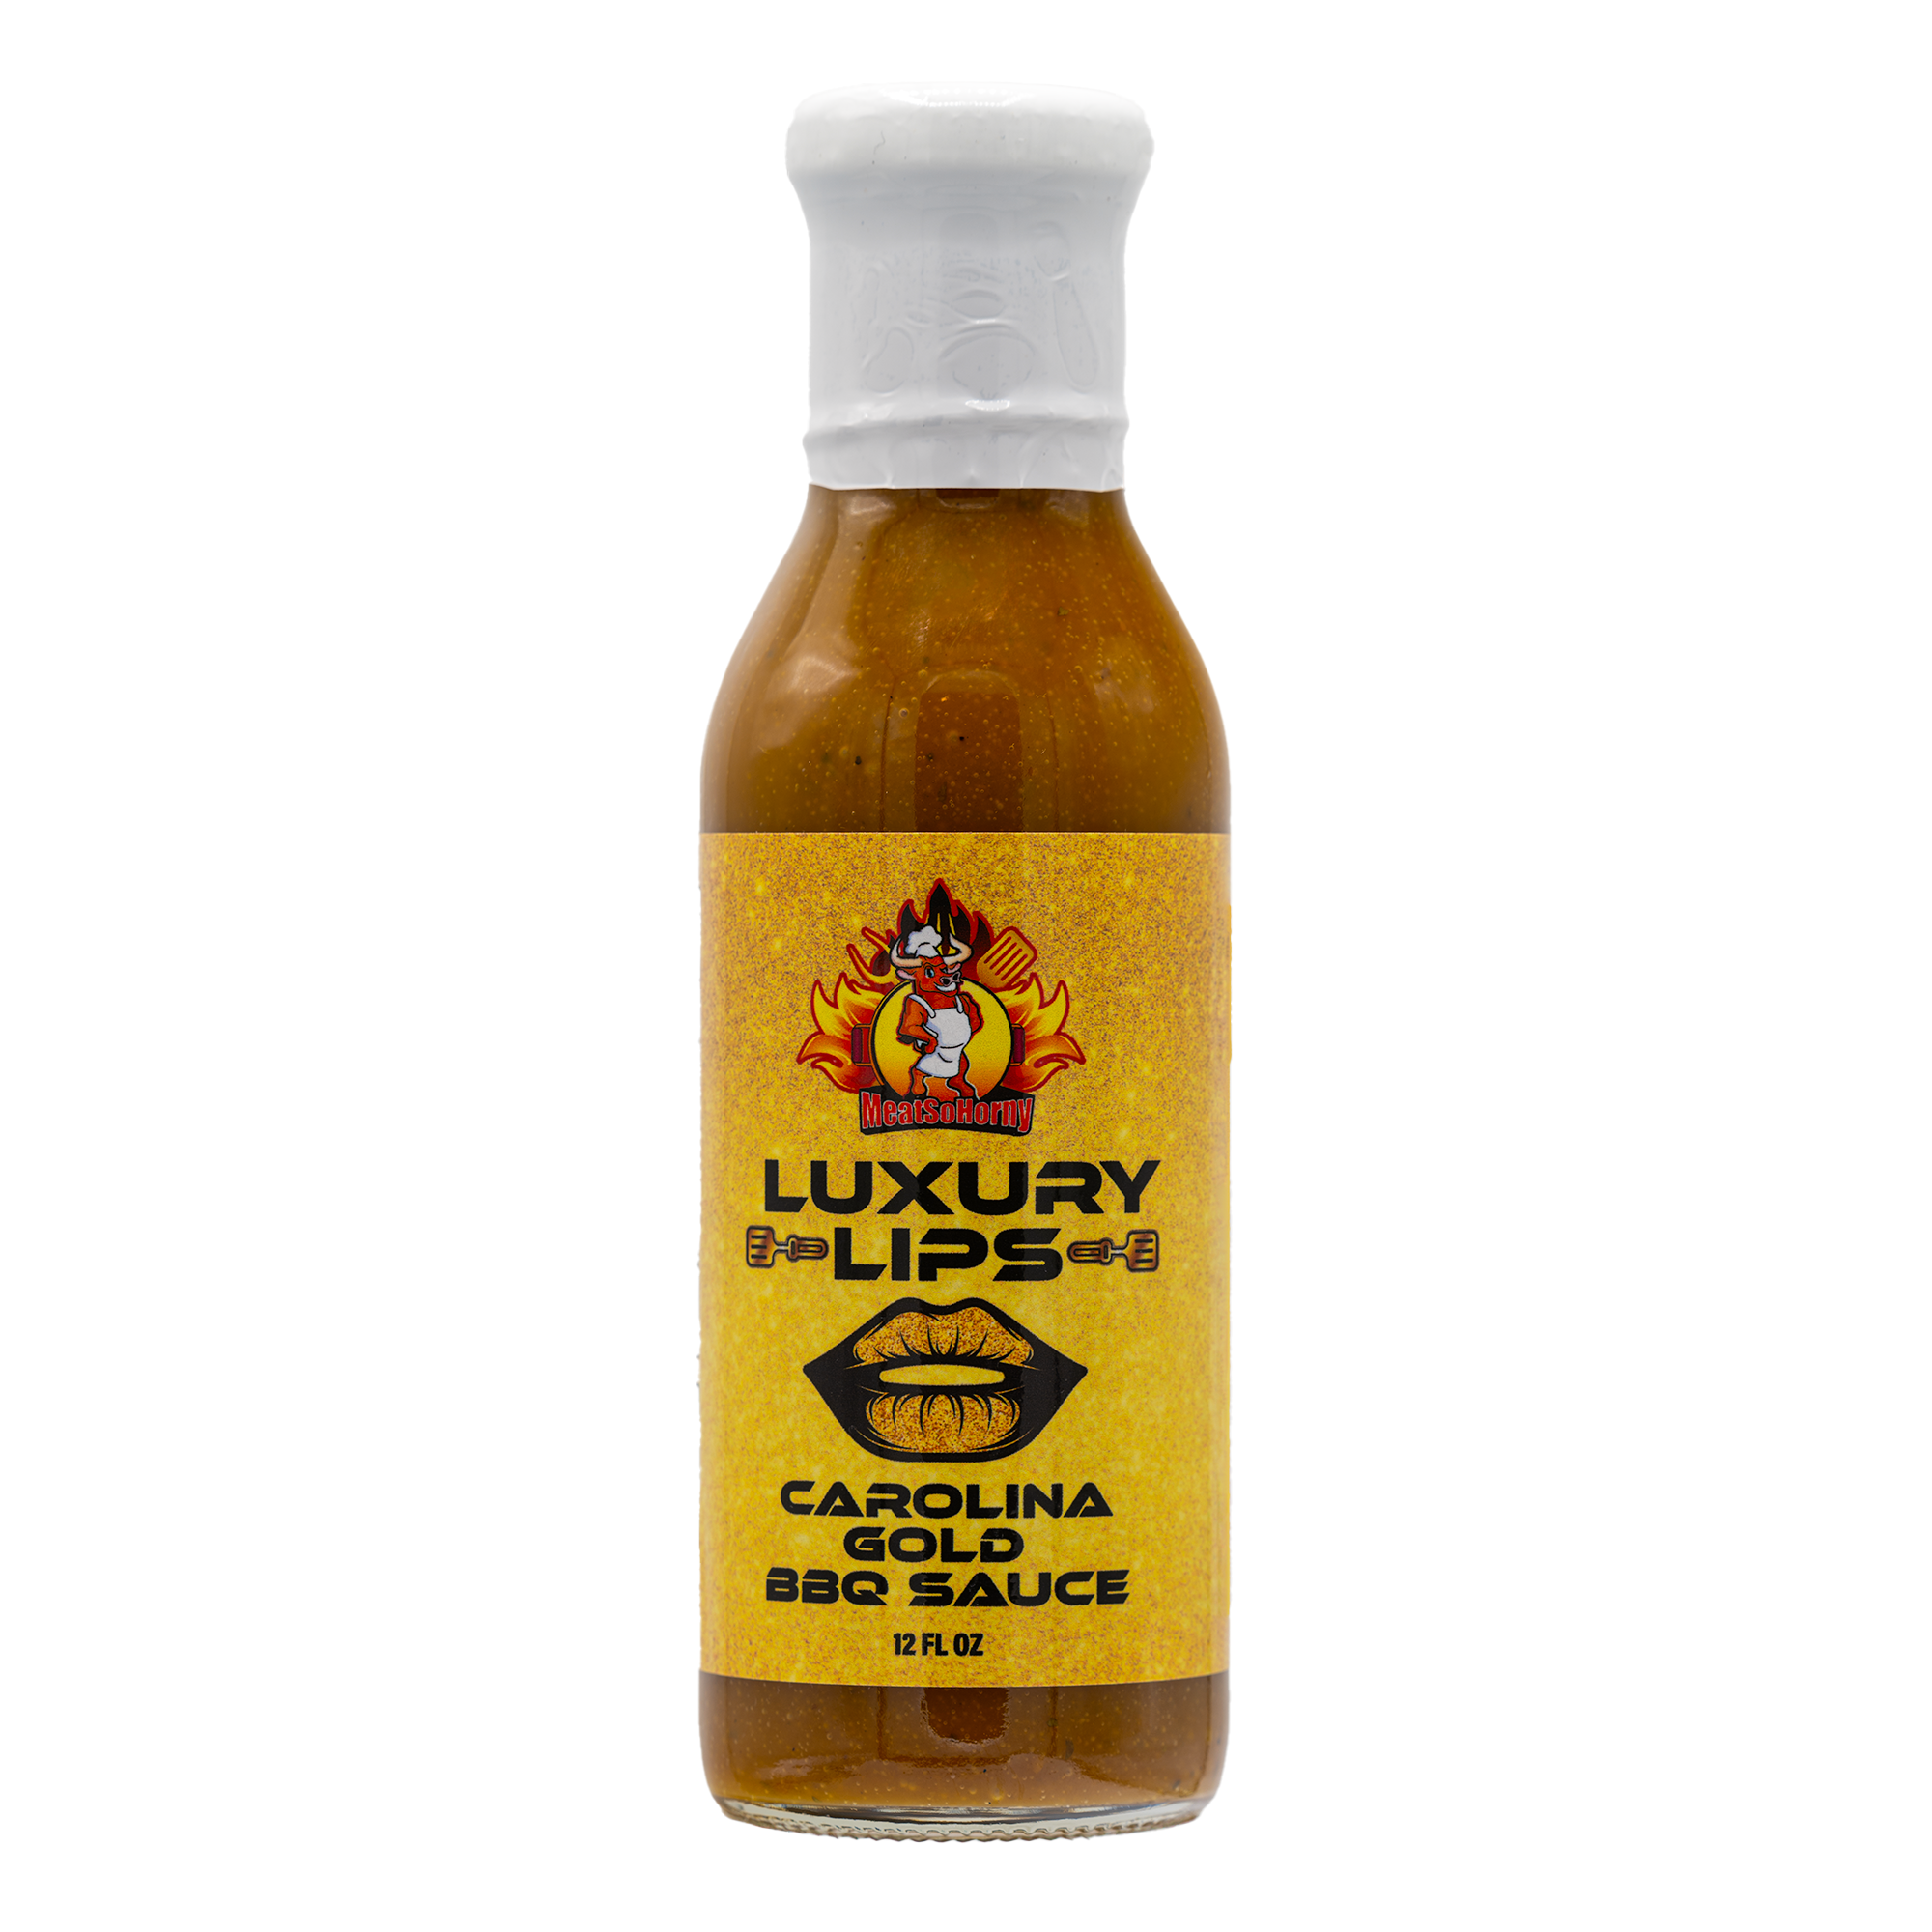 LUX Lips Carolina Gold BBQ Sauce